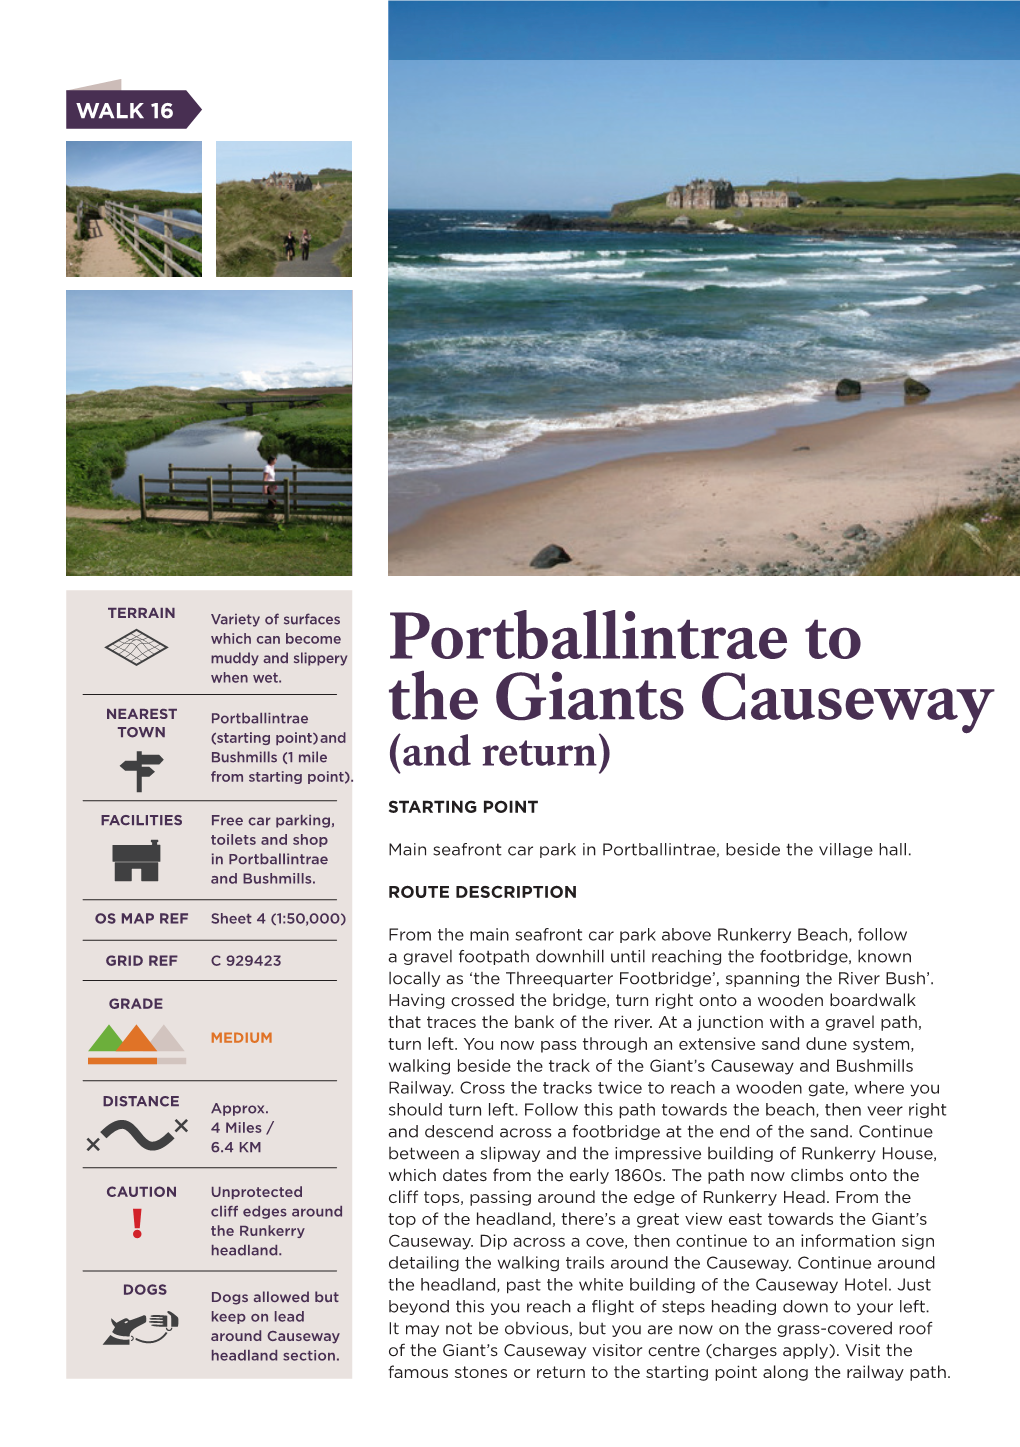 Portballintrae to the Giants Causeway